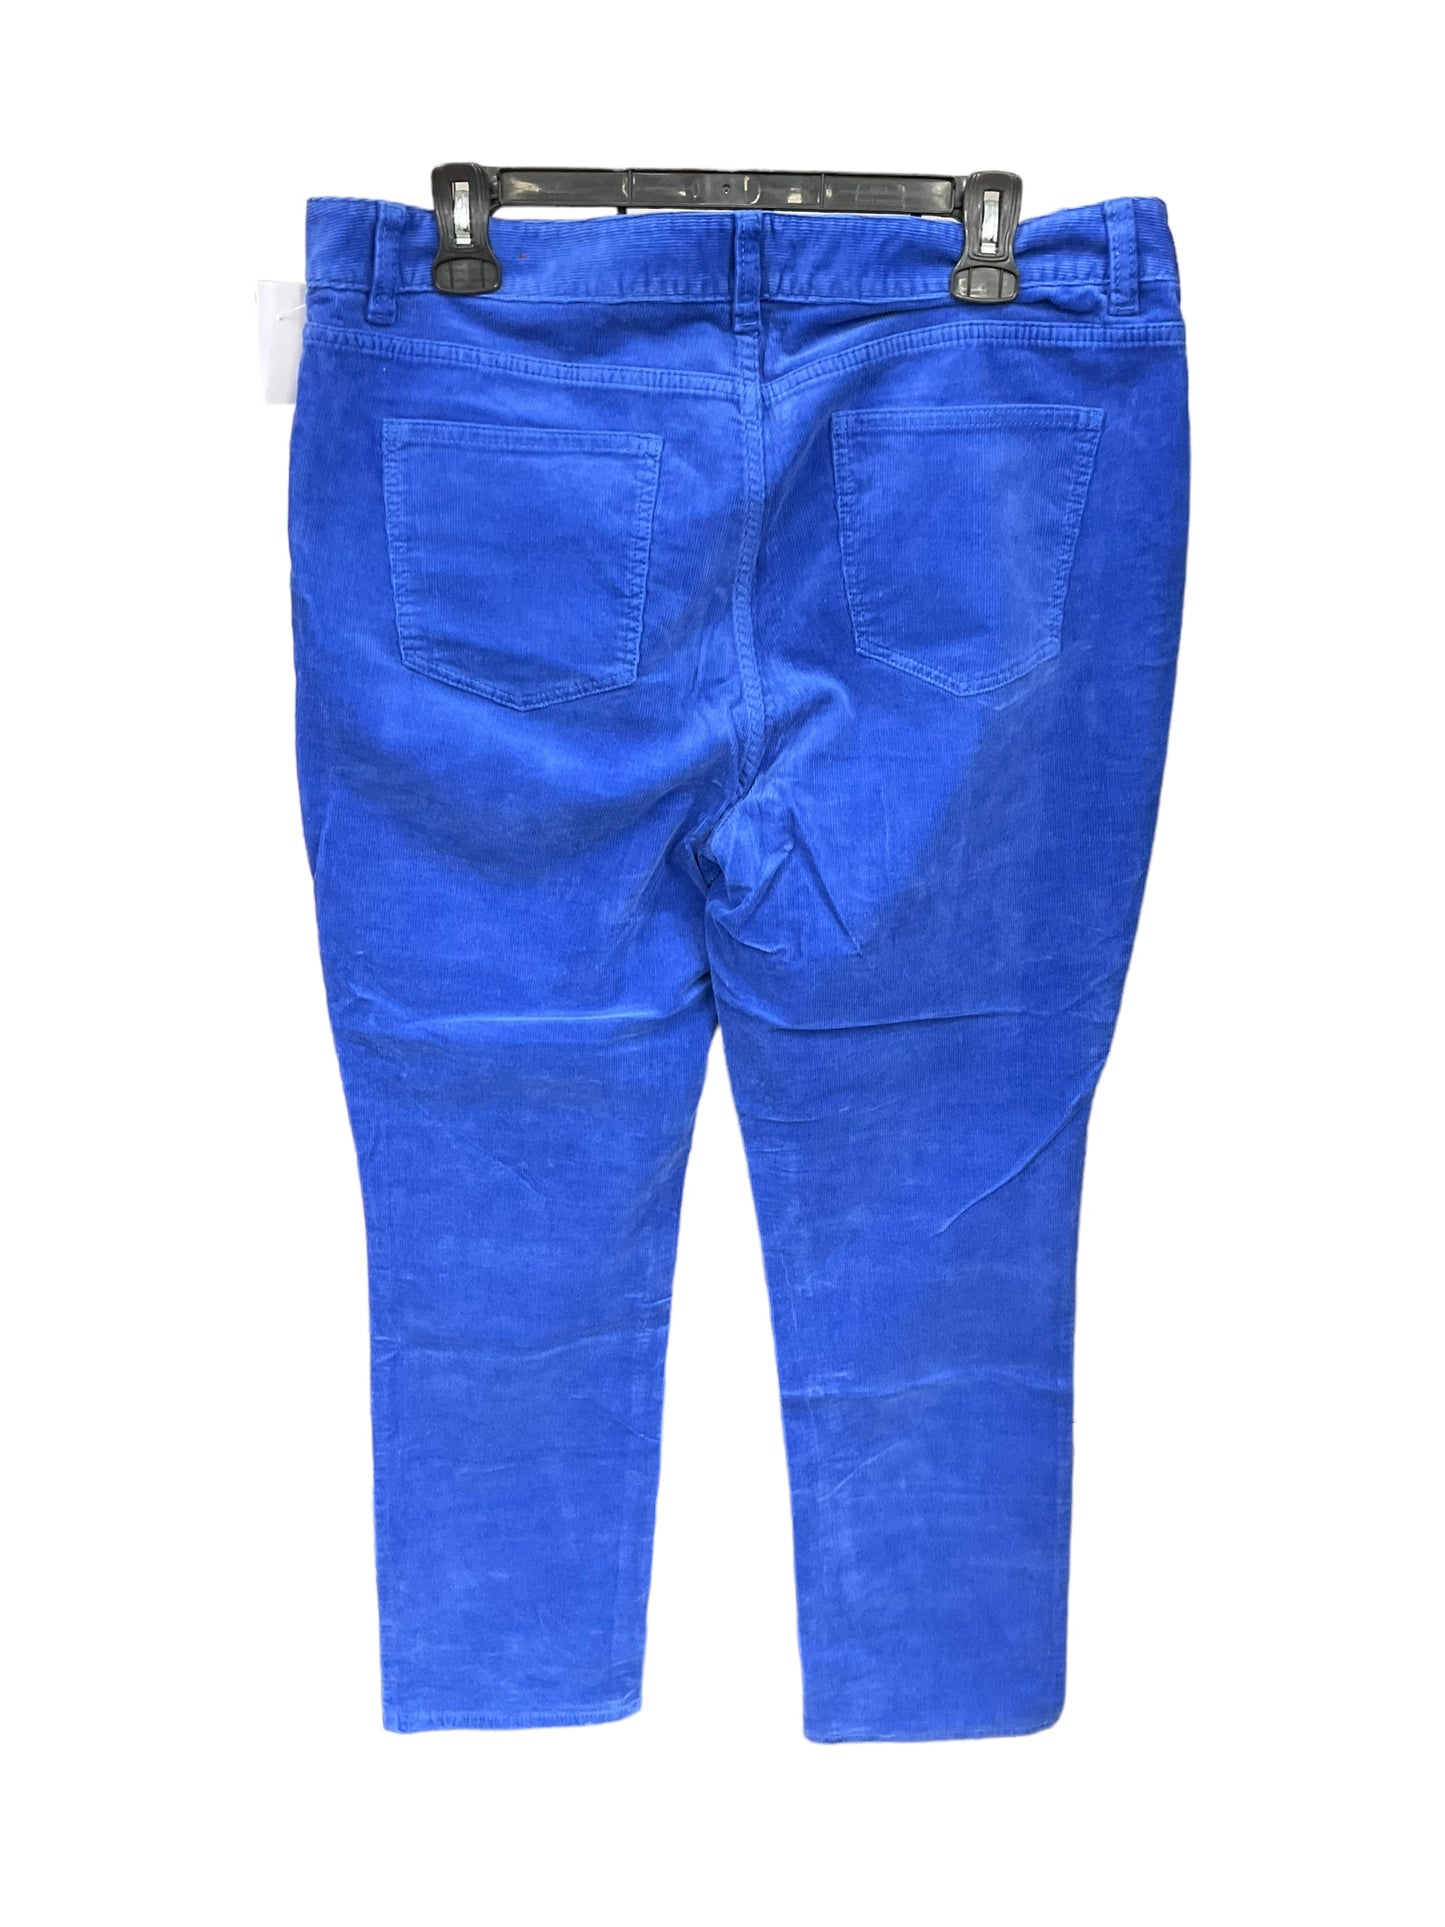 Pants Corduroy By Talbots  Size: 14